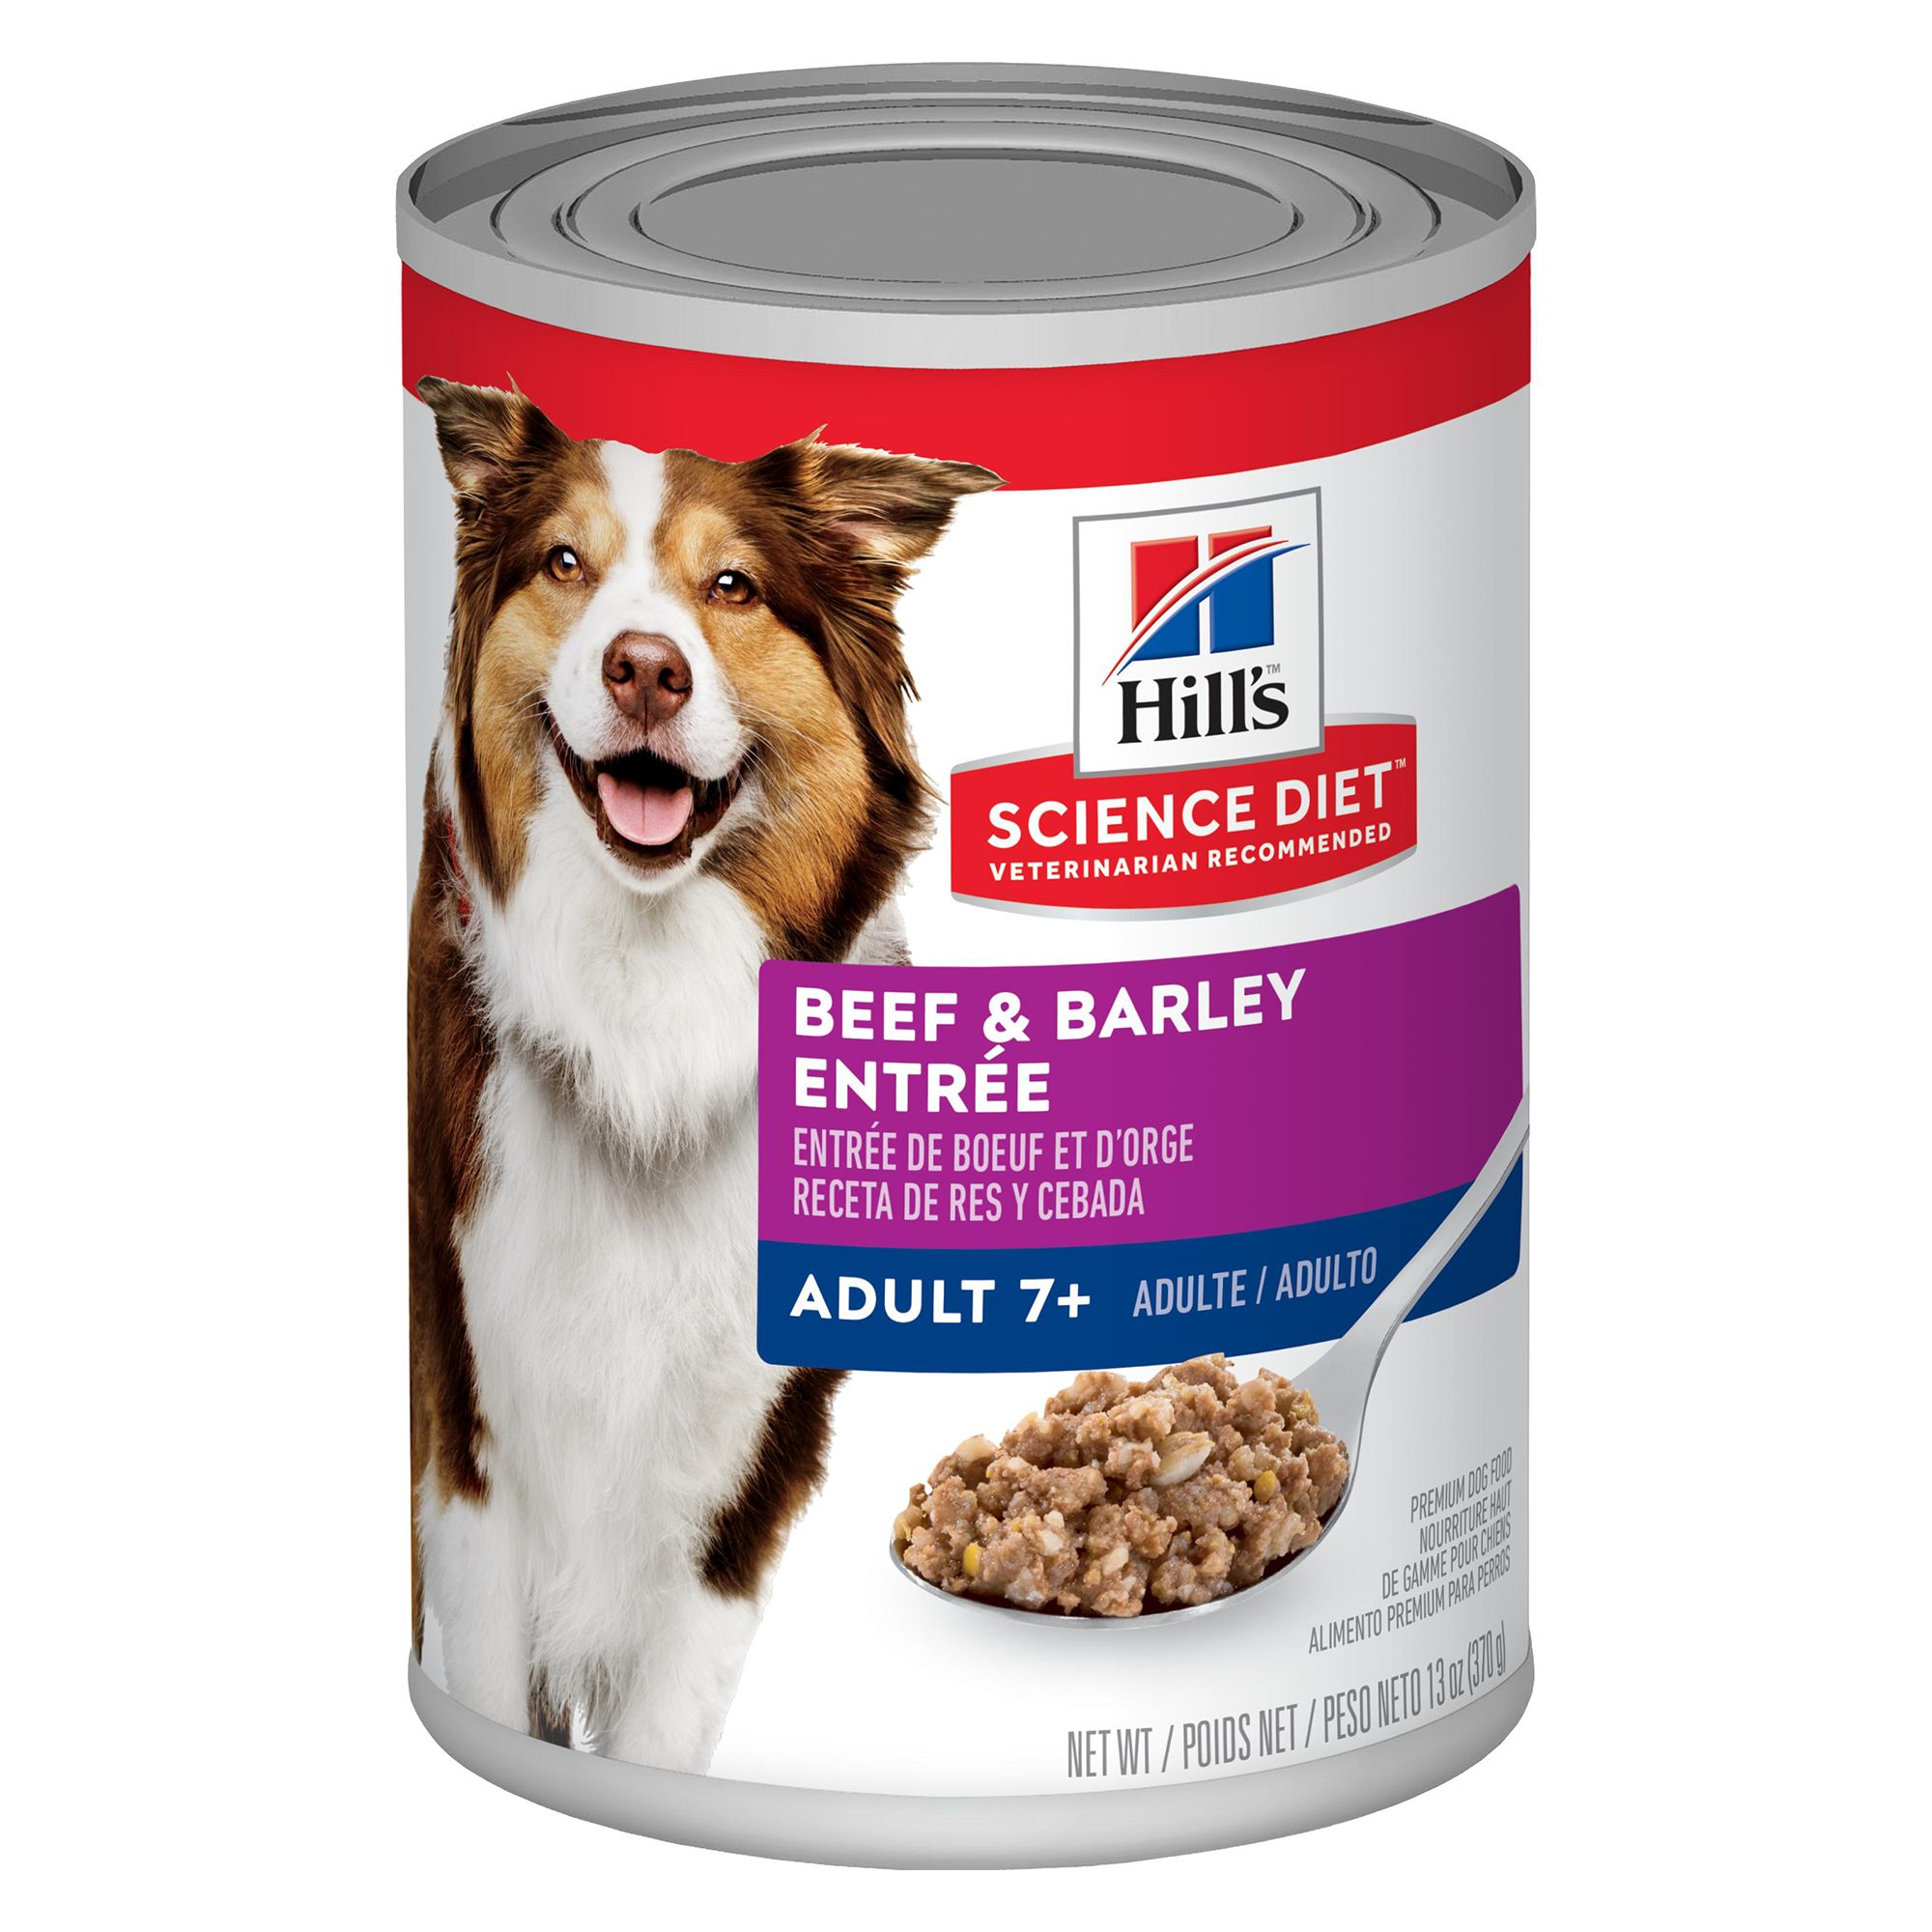 Dog Food Brands Grain Free Organic Natural Dog Food Petsmart